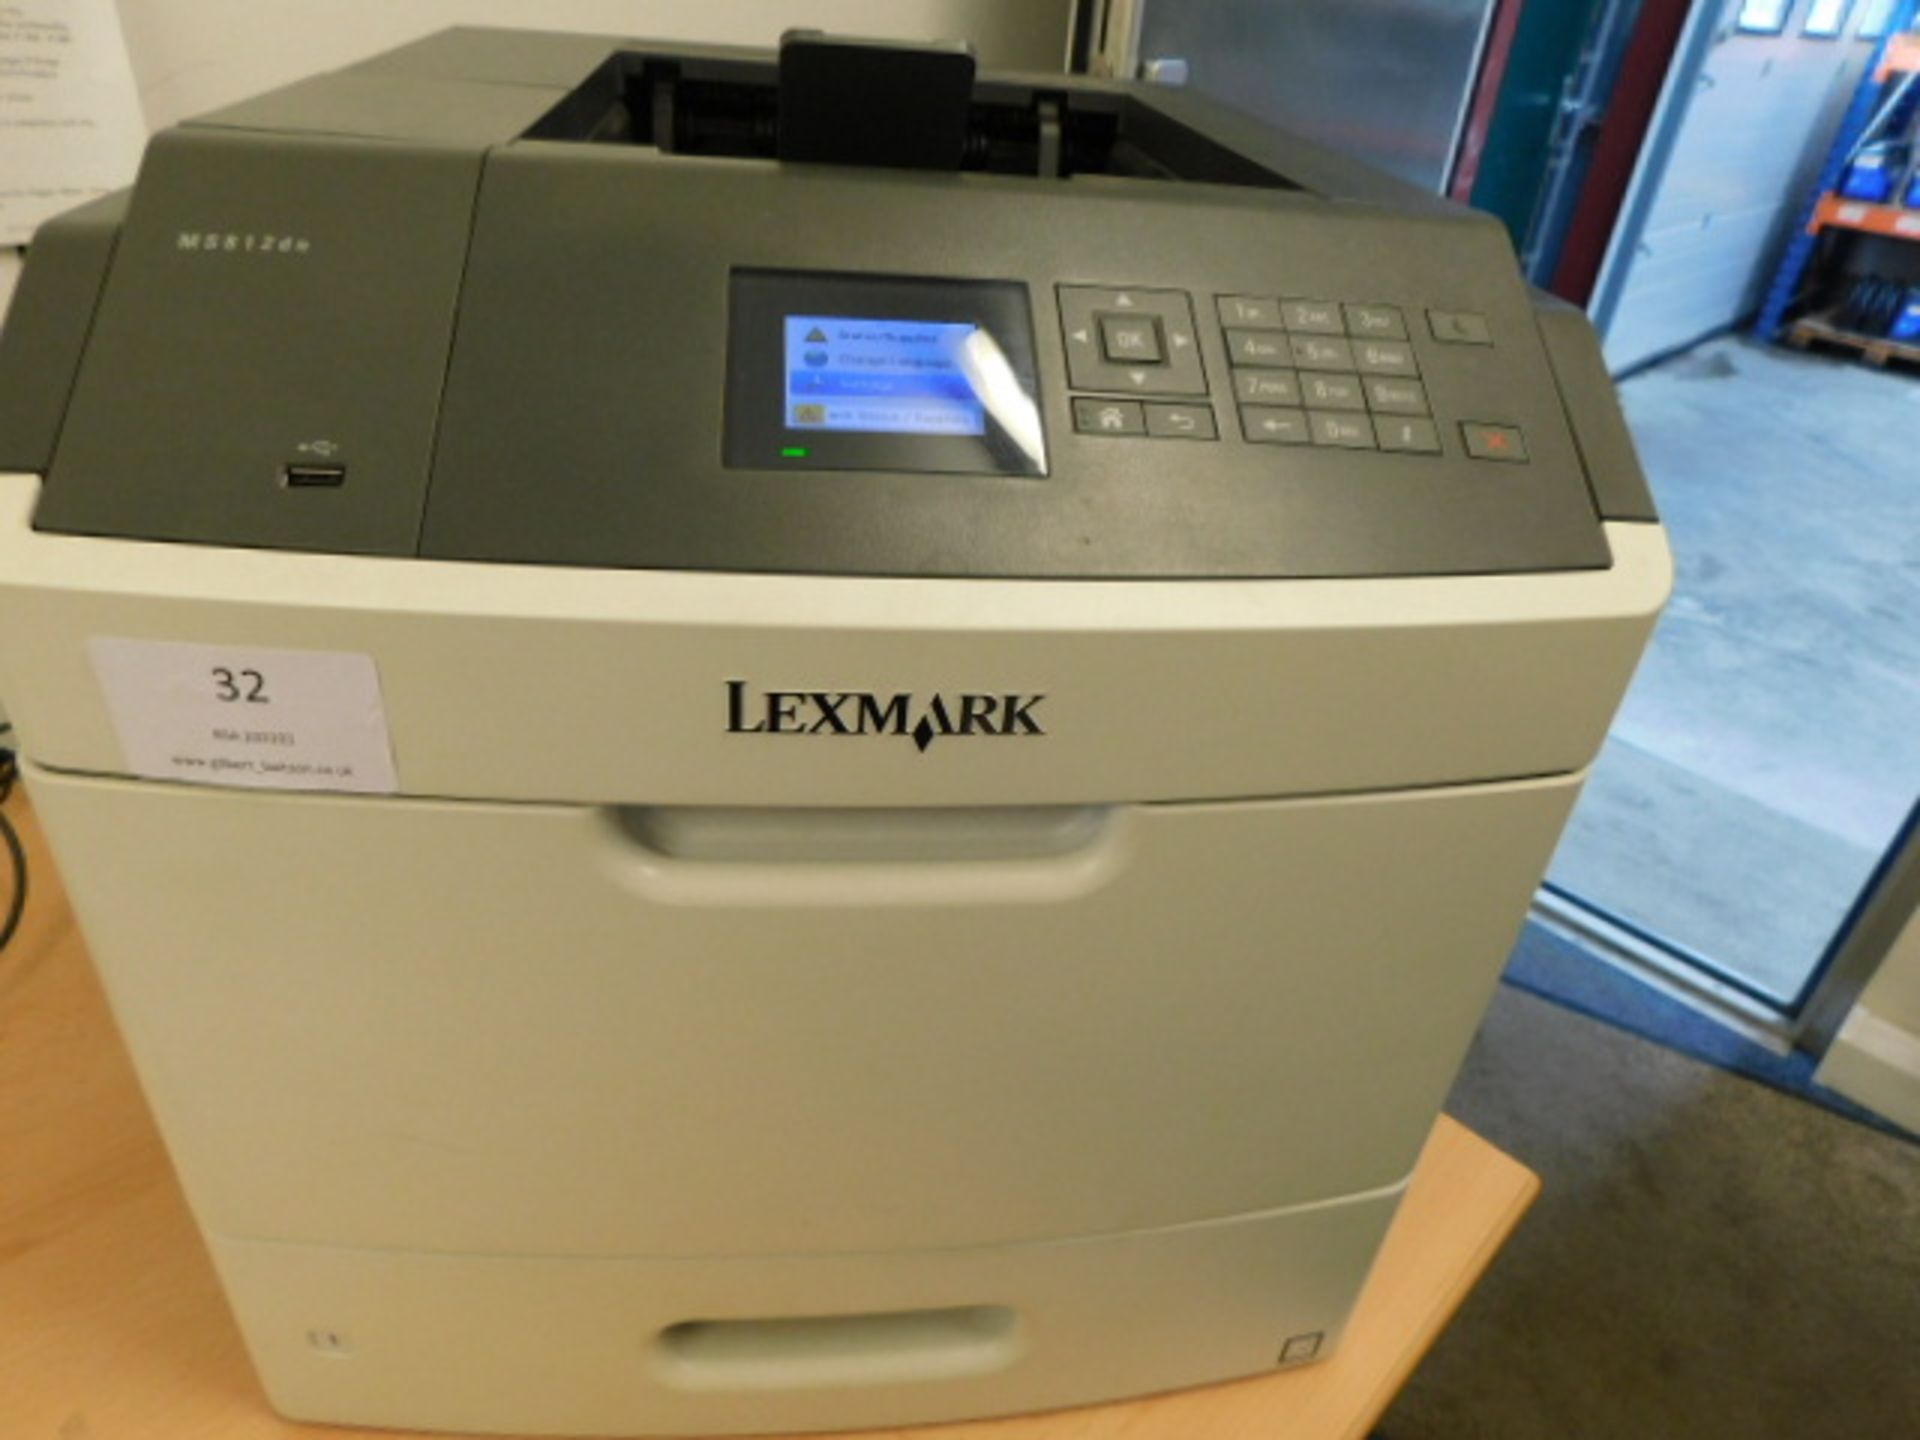 * Lexmark M5812dn Printer